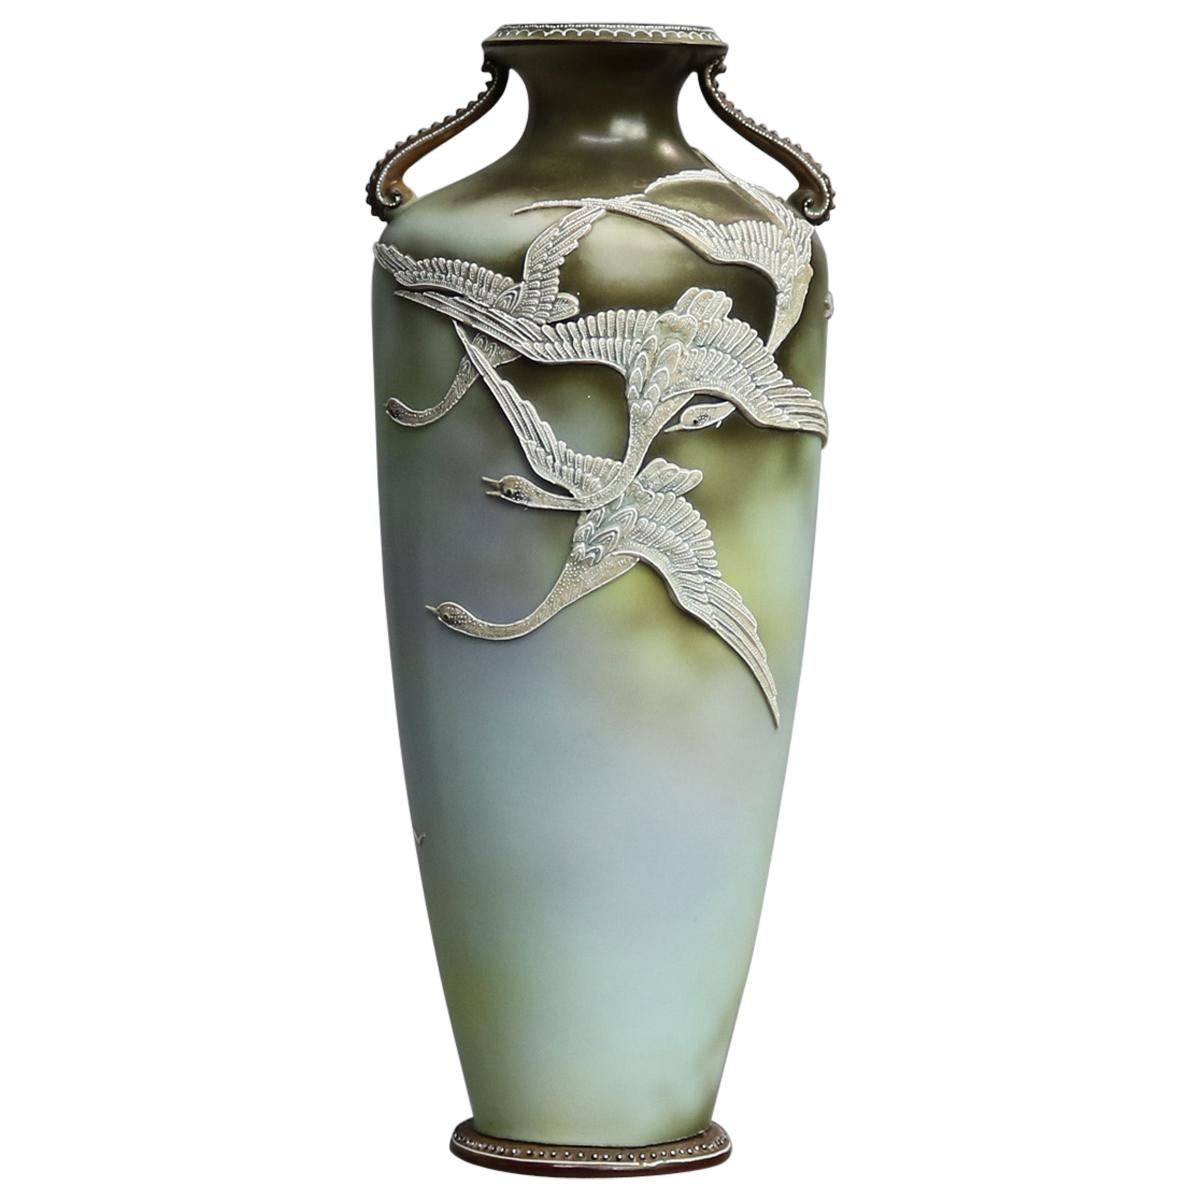 Antique Art Nouveau Japanese Nippon Moriage Porcelain Urn Vase with Geese